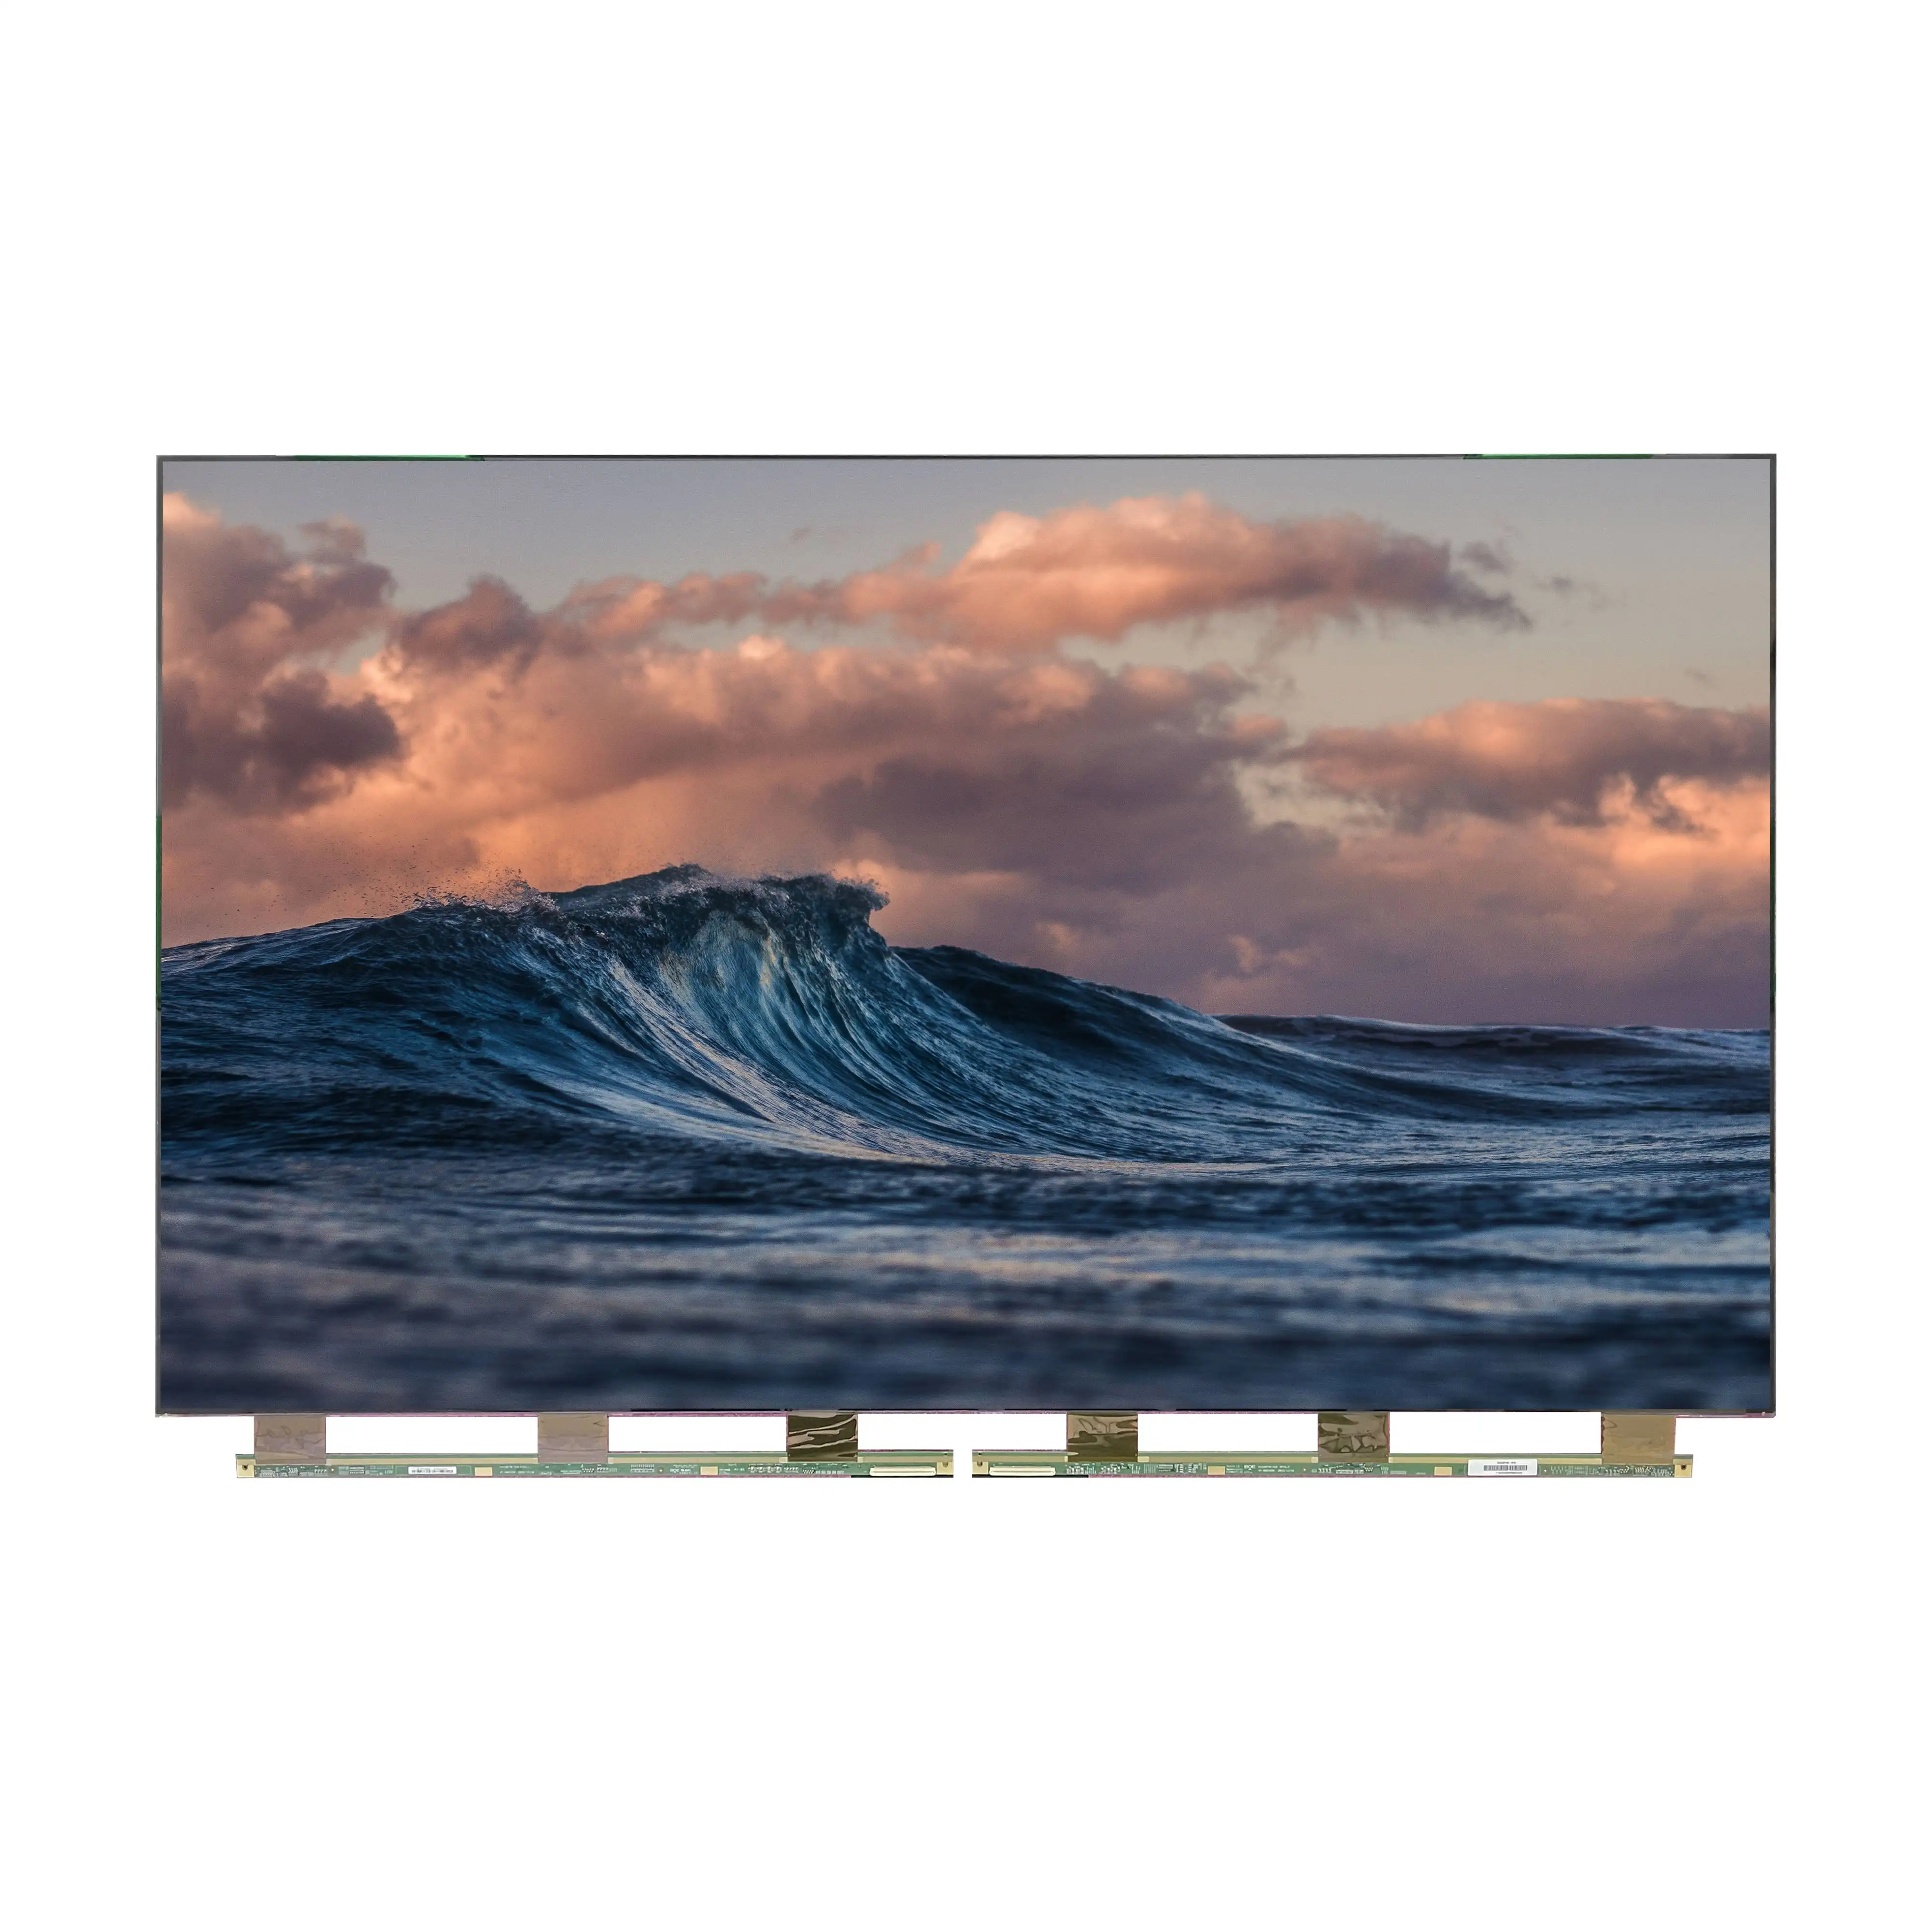 BOE panel manufacturer direct sales smart TV universal LED LCD TV 43-inch 2K full HD TV LCD screen display panel